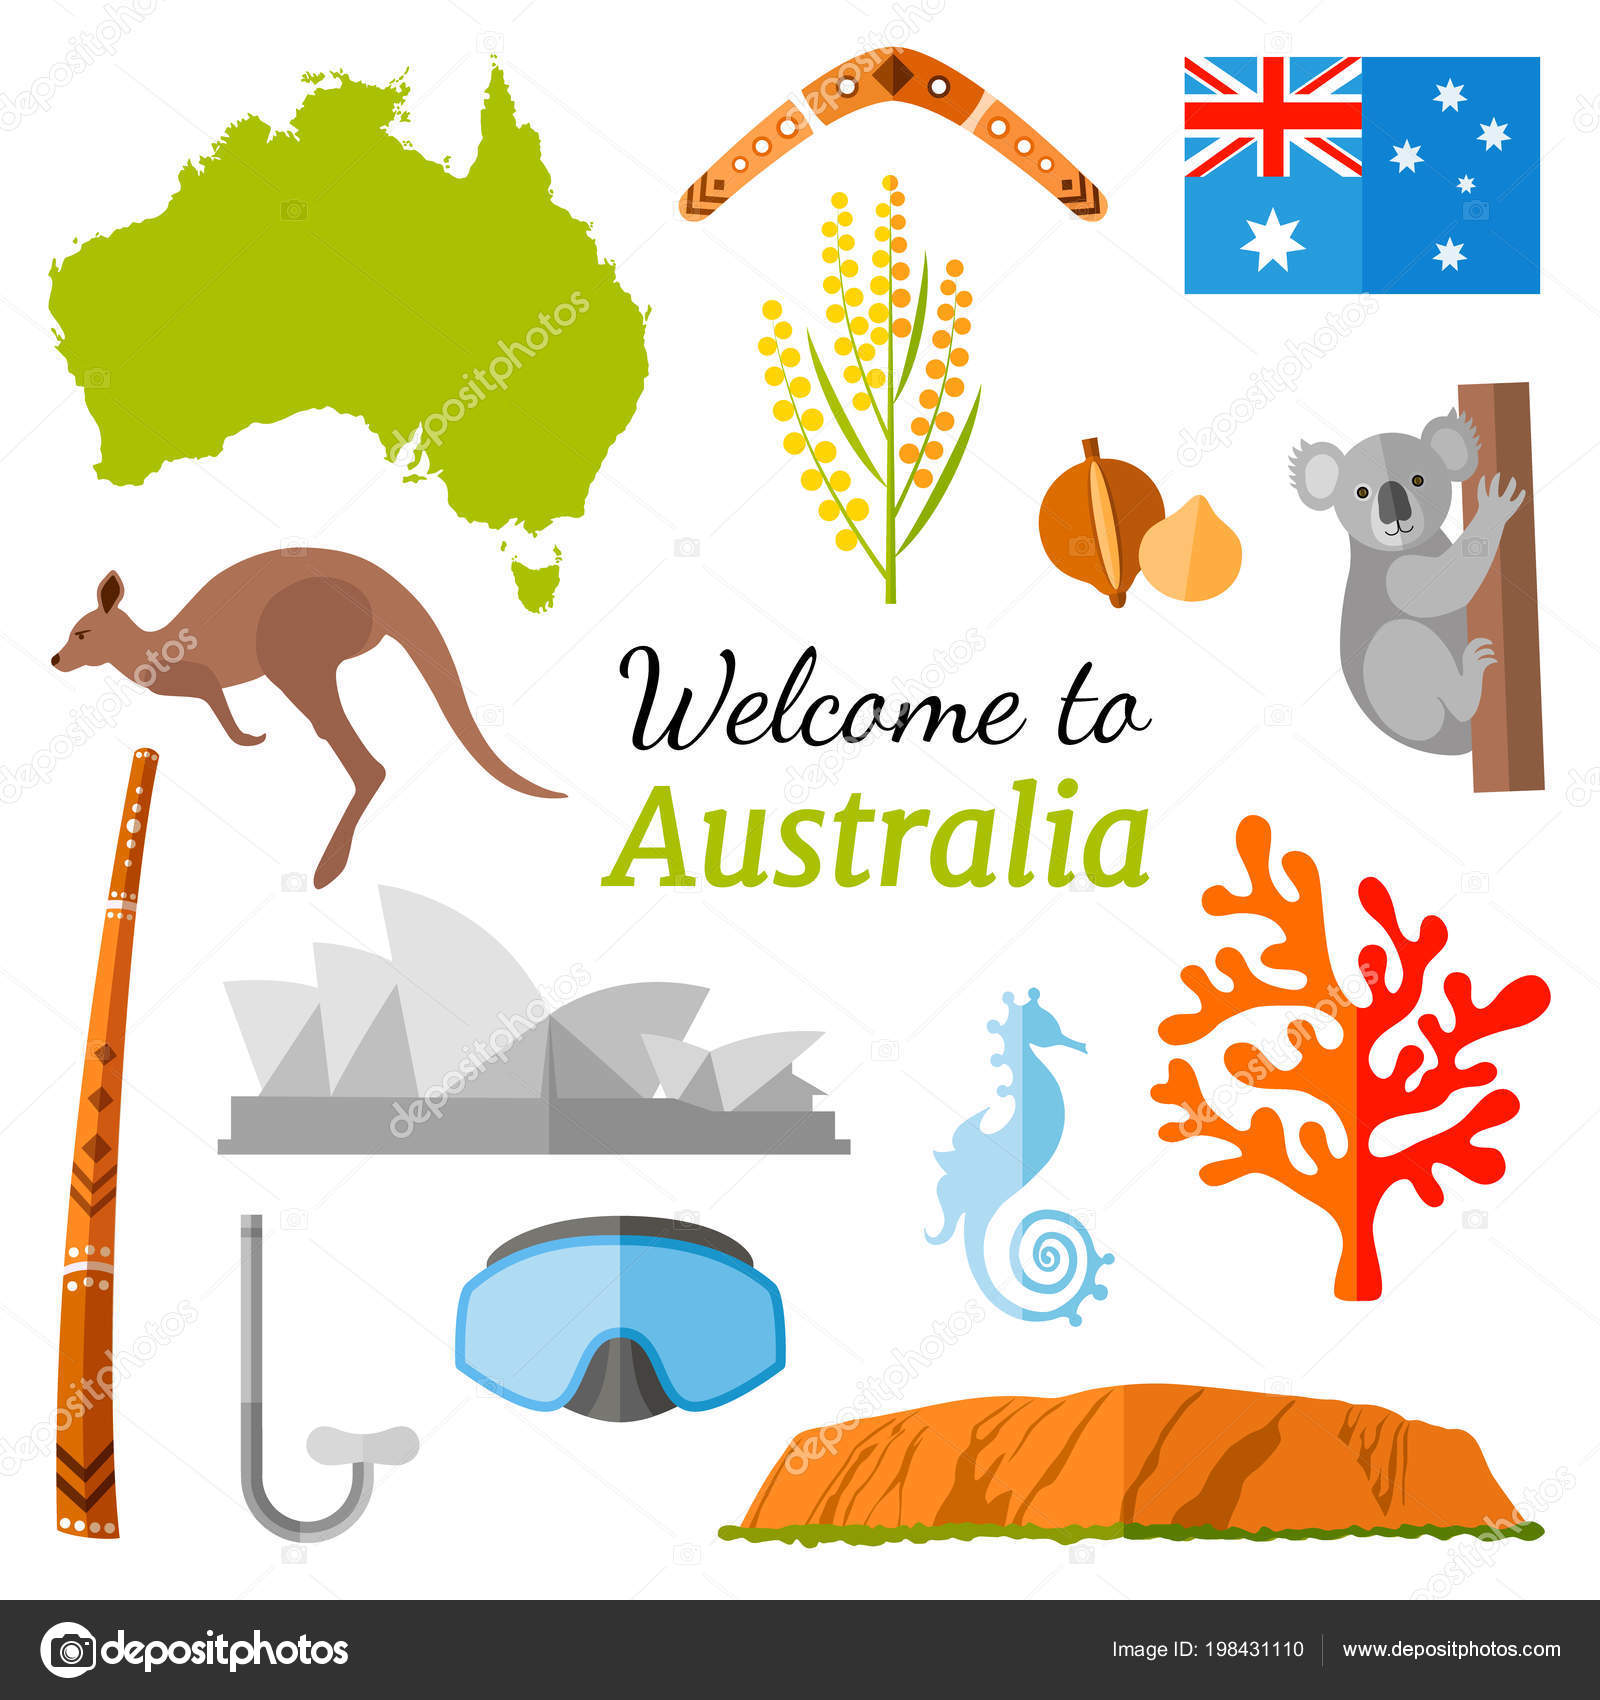 Australia Travel Banner Icons Souvenirs Design Elements Stock Vector Image ©kurmanstock.gmail.com #198431110